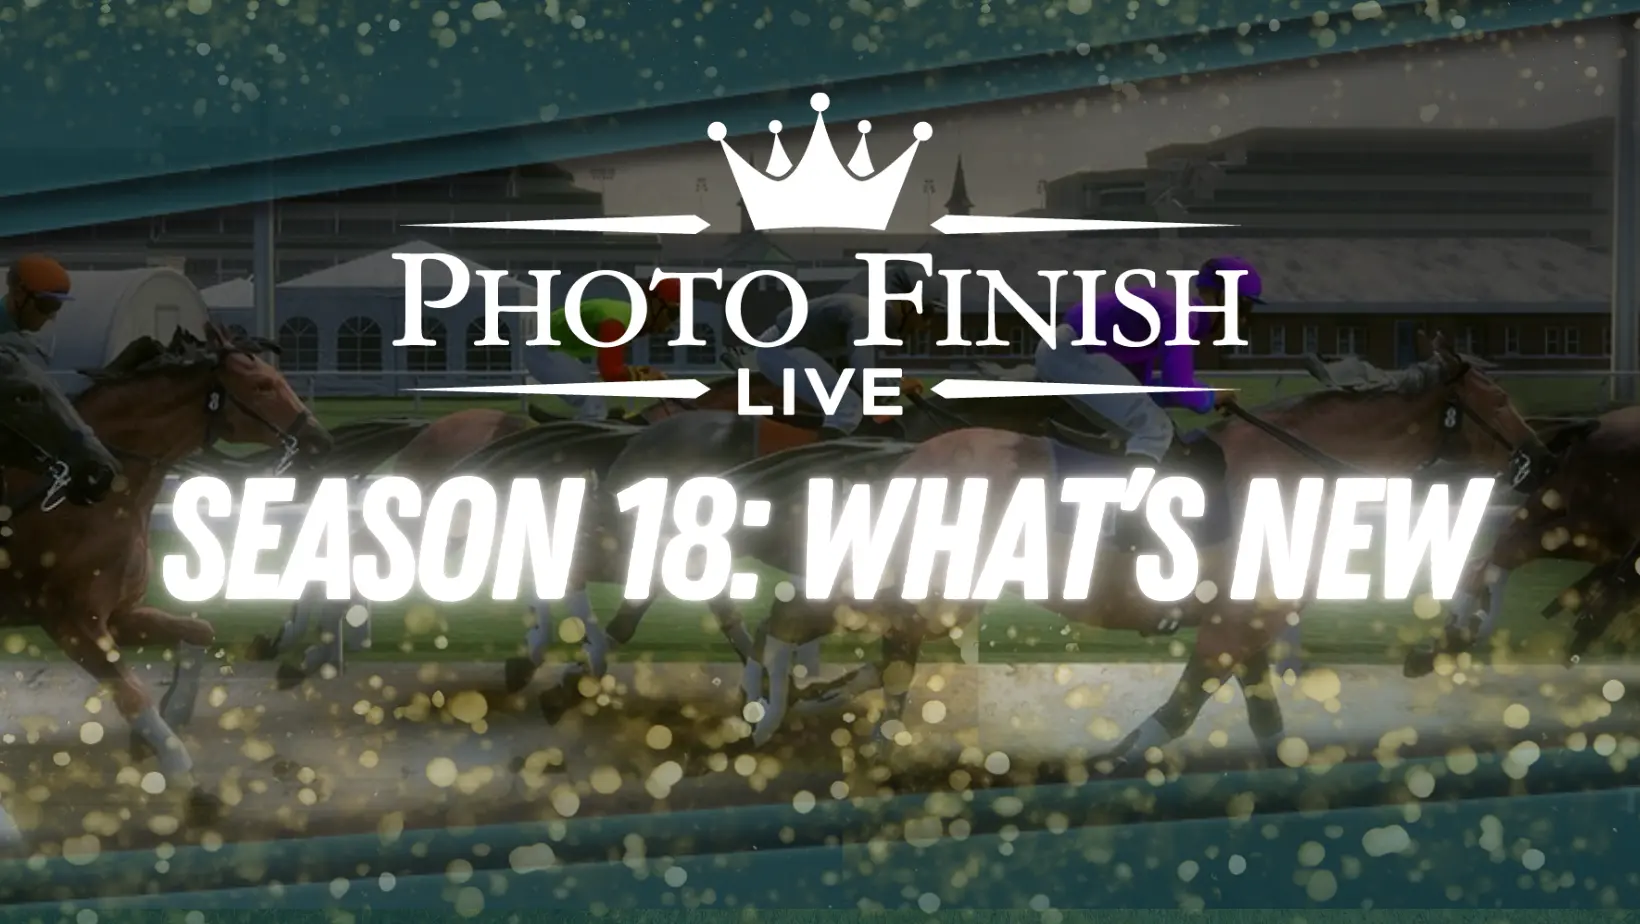 Season 18: What’s New